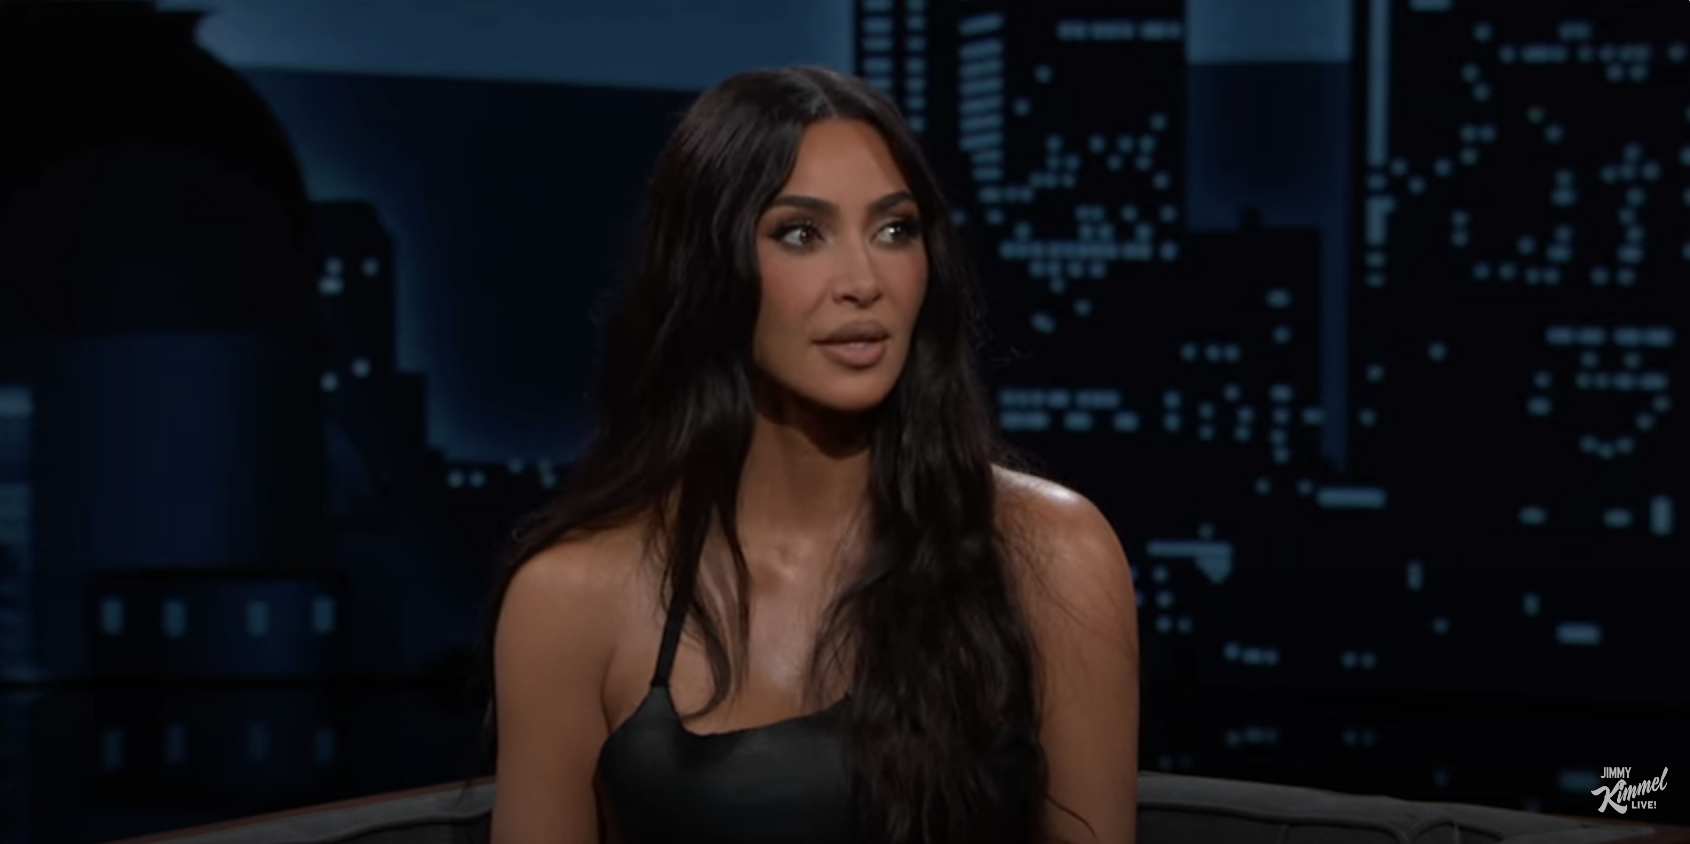 Kim Kardashian in a sleek top, seated on a TV show set